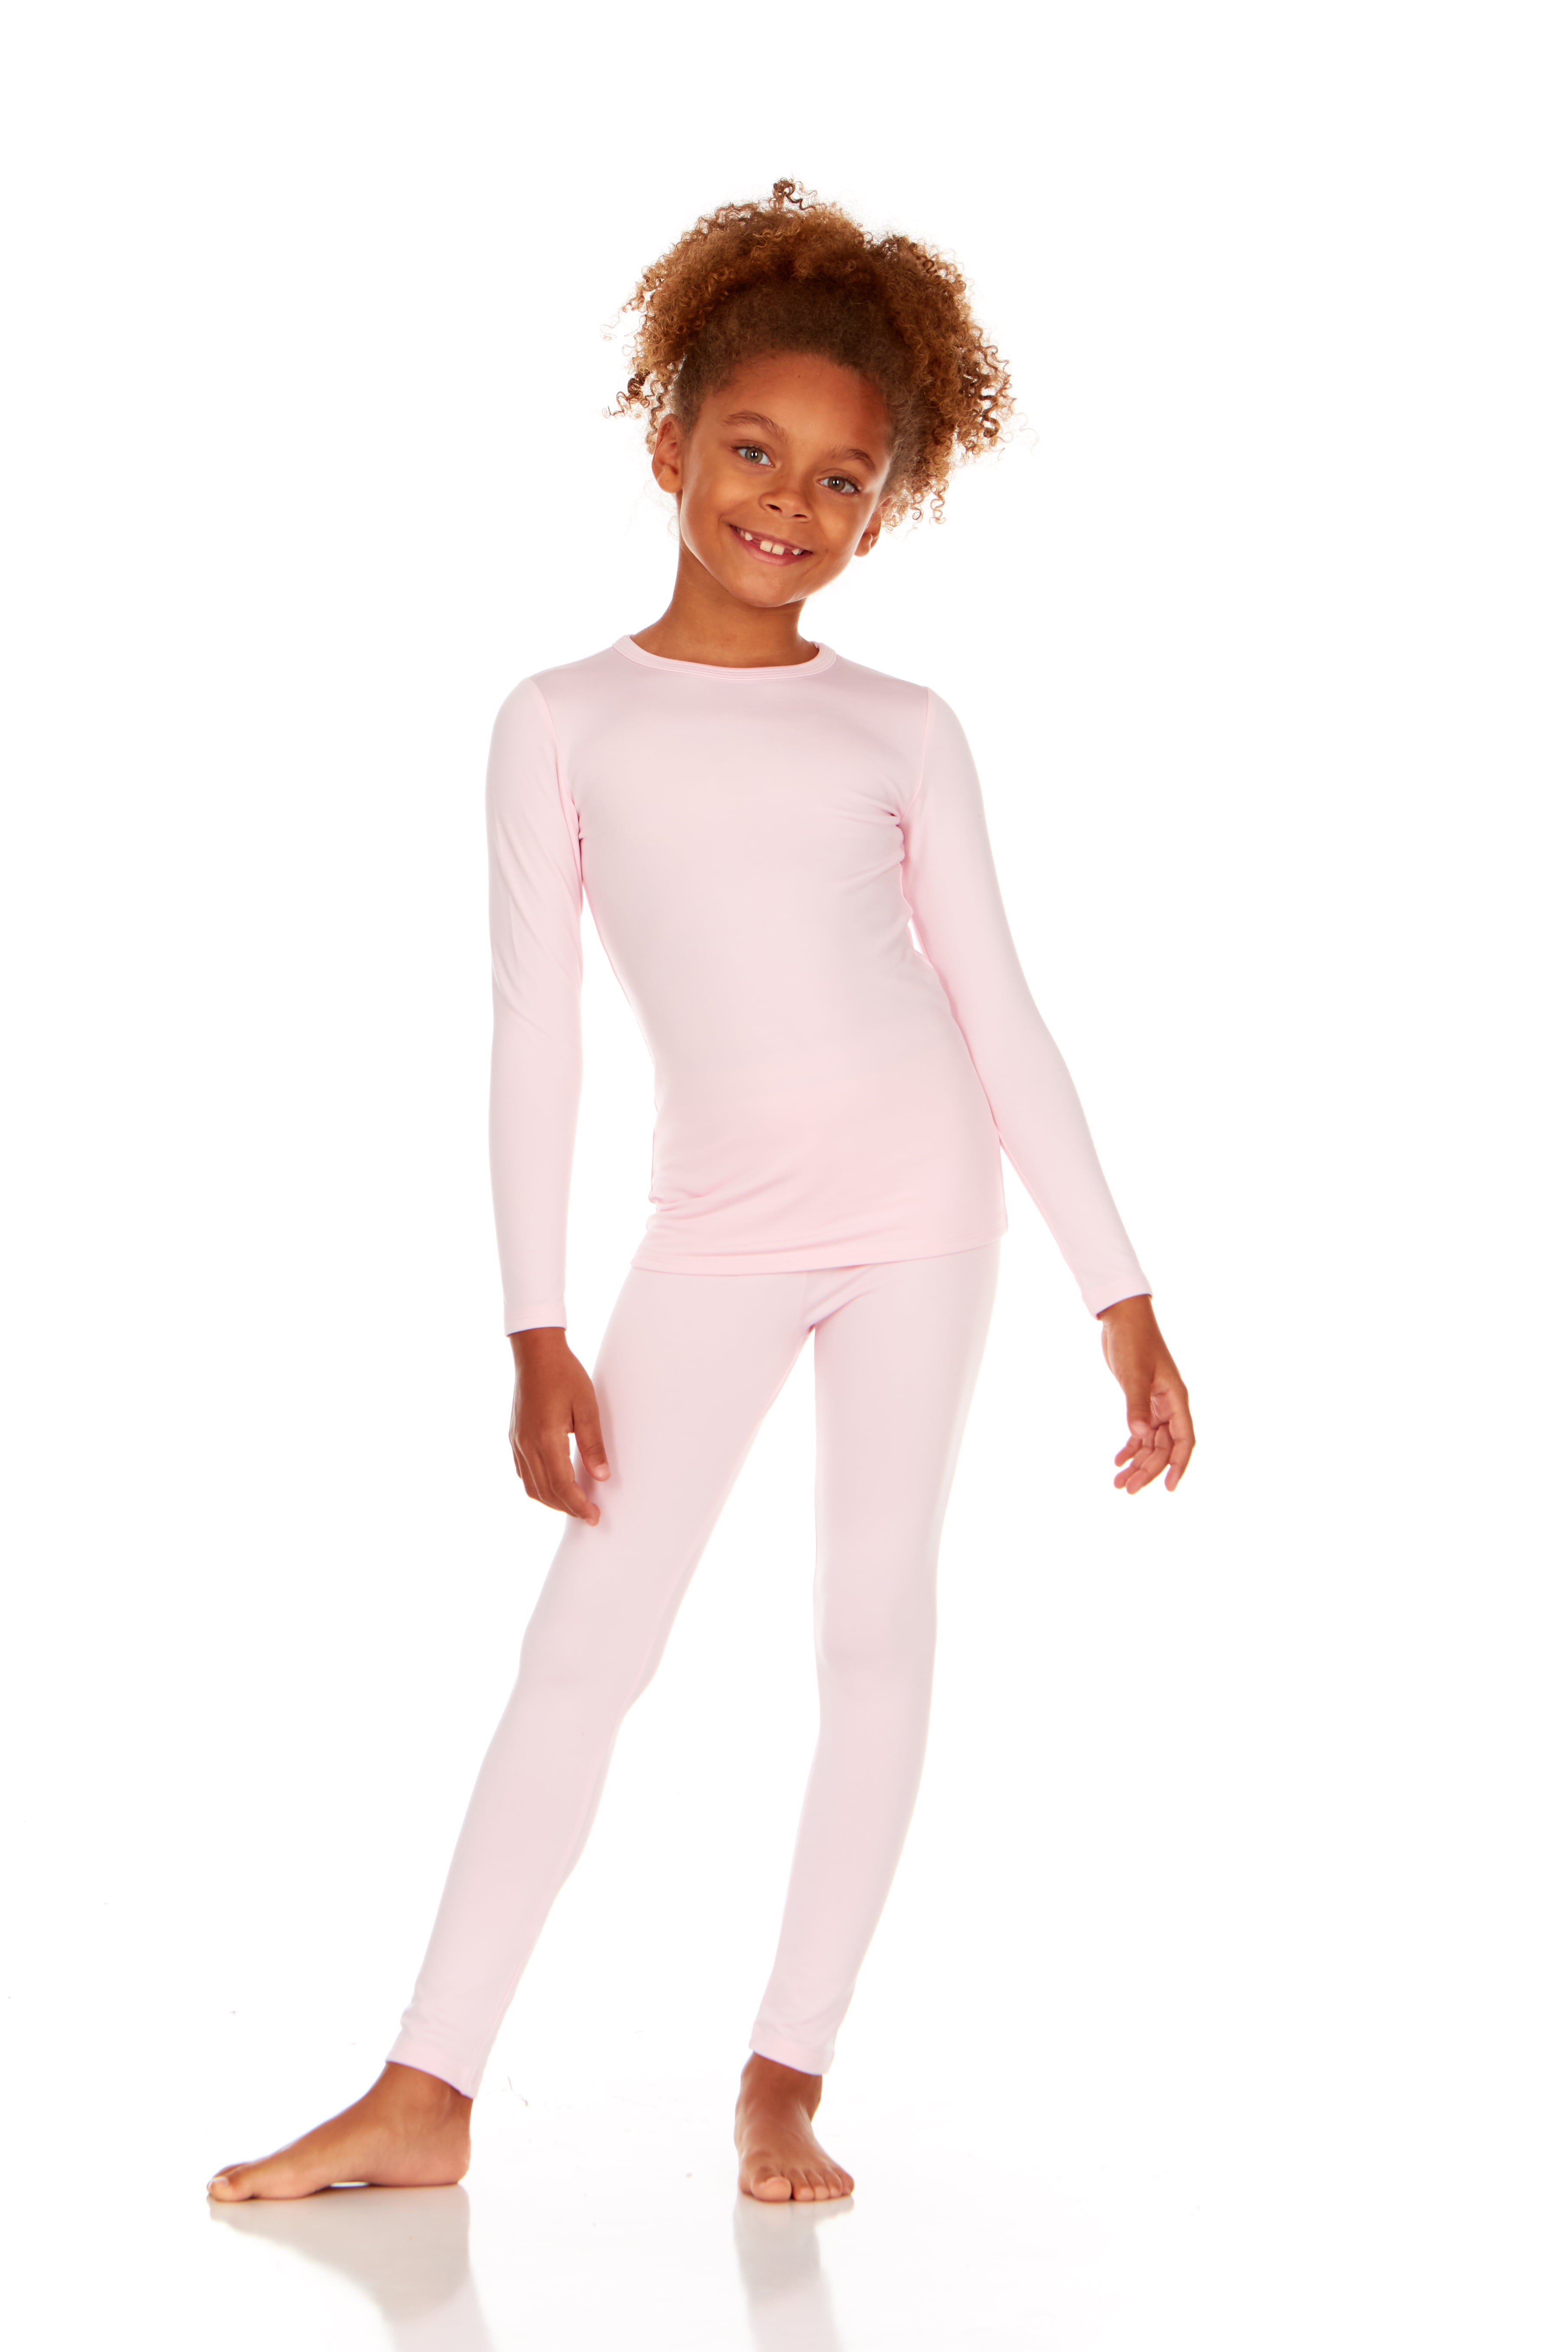 Thermajane Thermal Underwear for Girls Long John Set Kids (Grey, X-Small) 